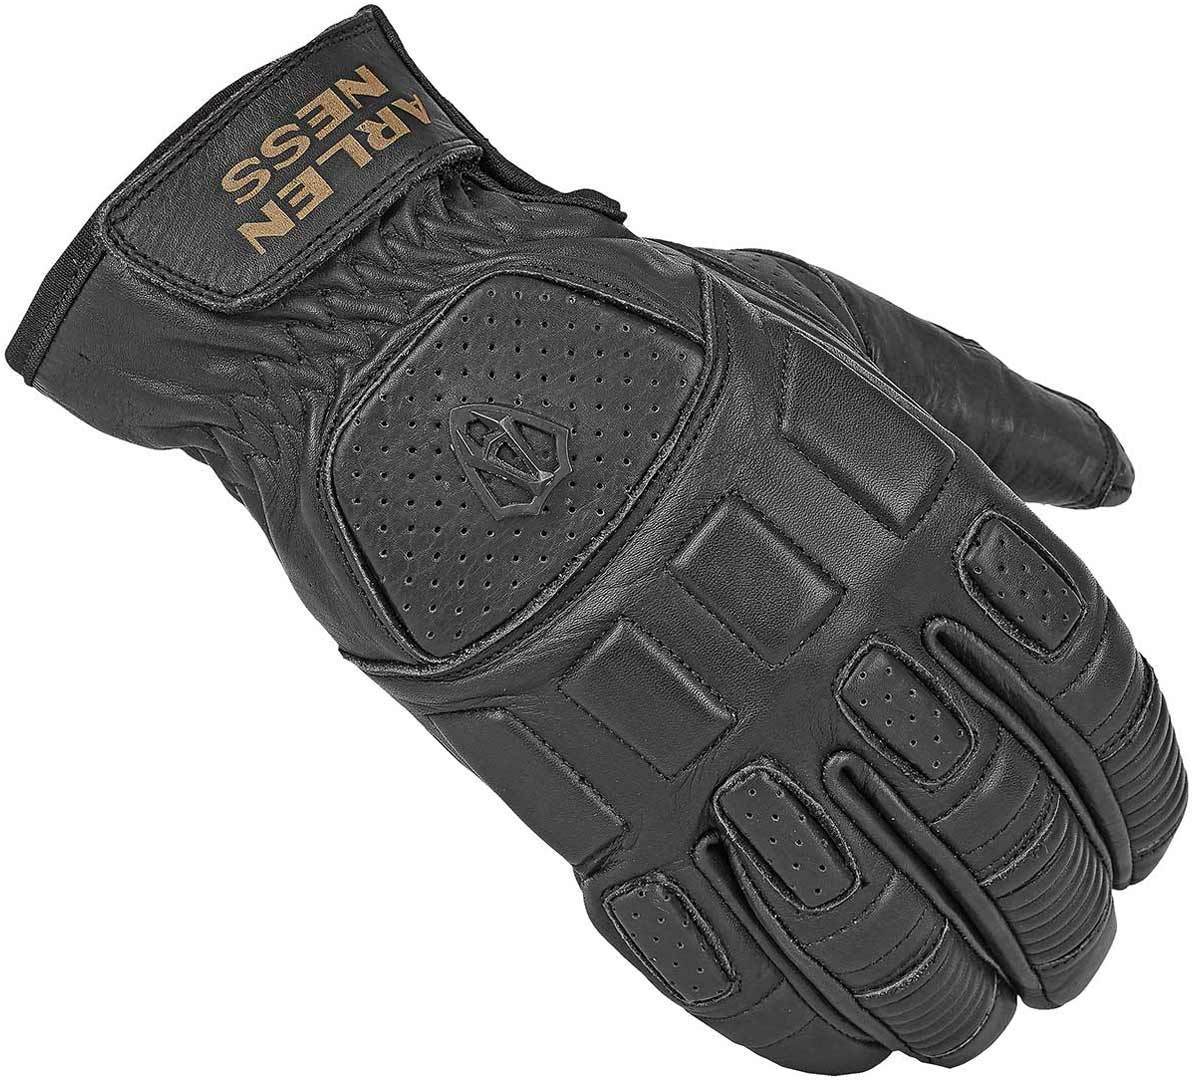 Arlen Ness Faxon Motorcycle Gloves#color_black